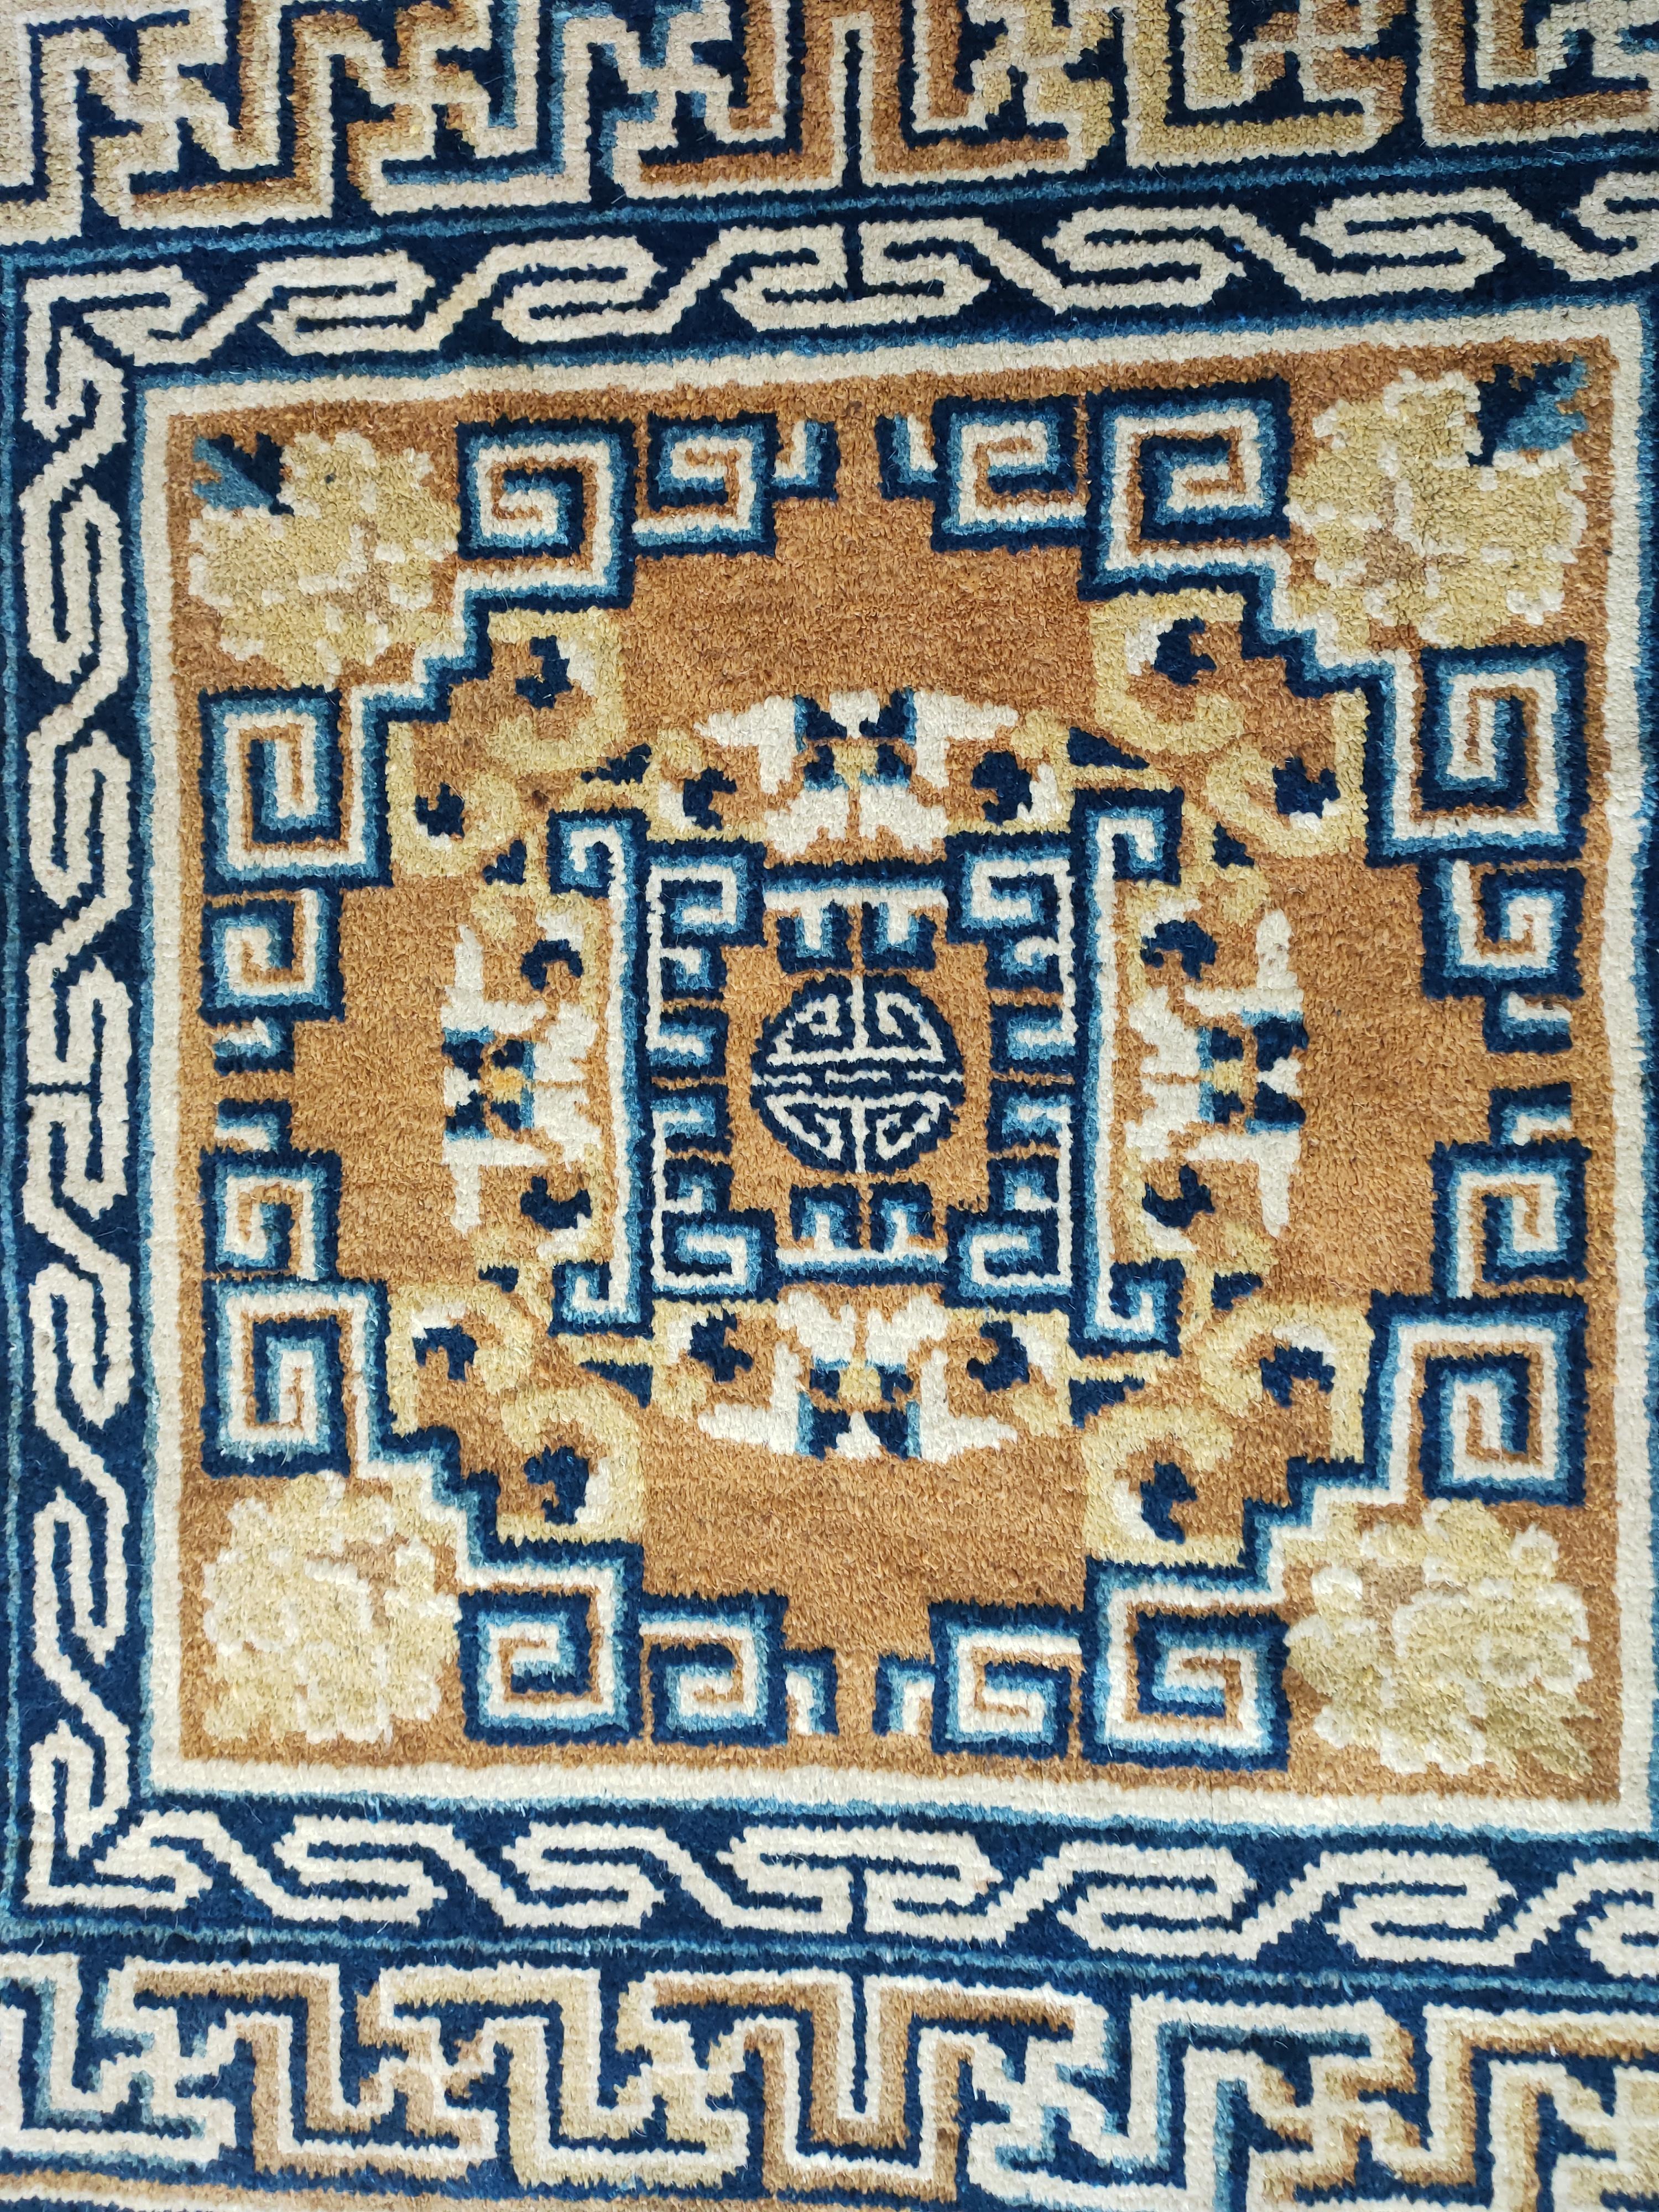 Antique Chinese - Ningxia rug, size: 2'4